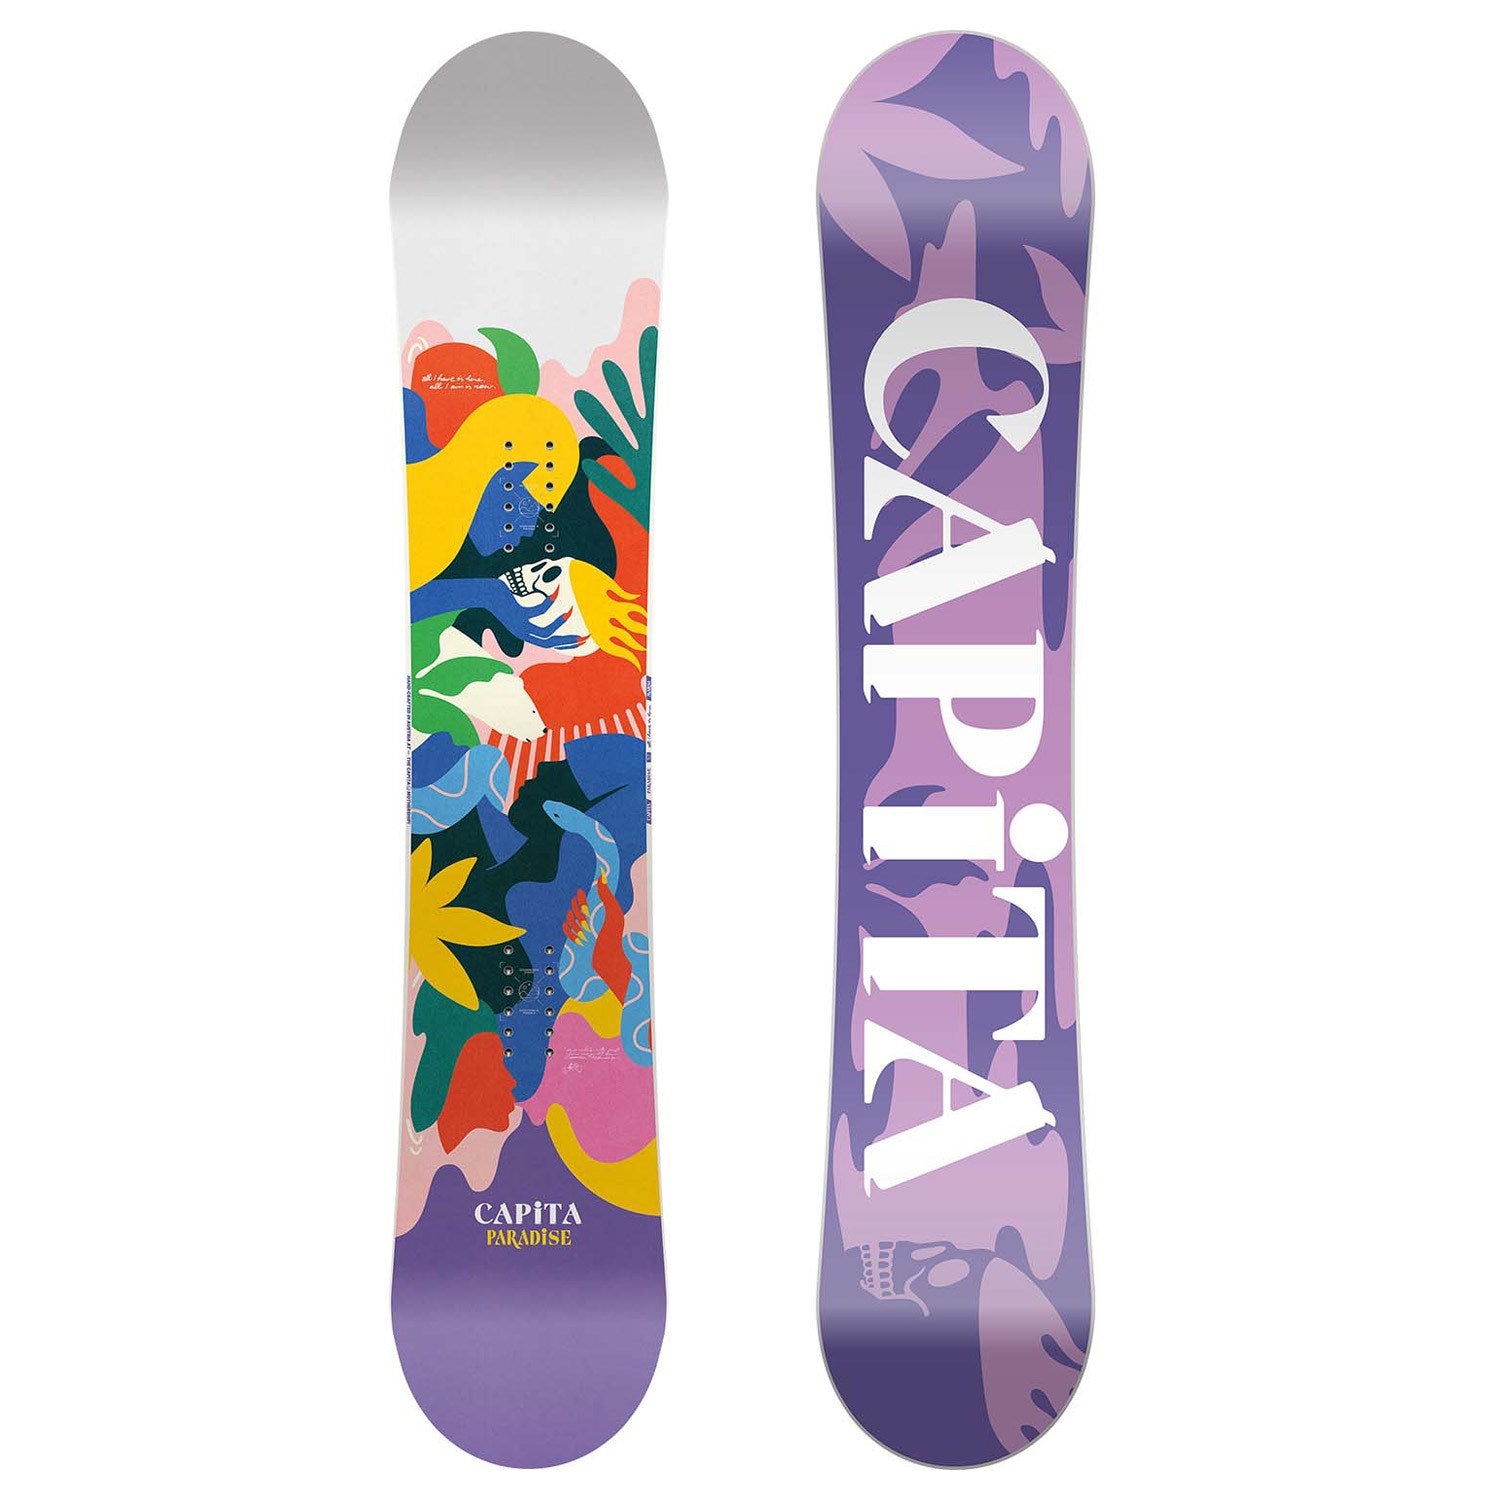 143 2023 Paradise Capita Women's Snowboard